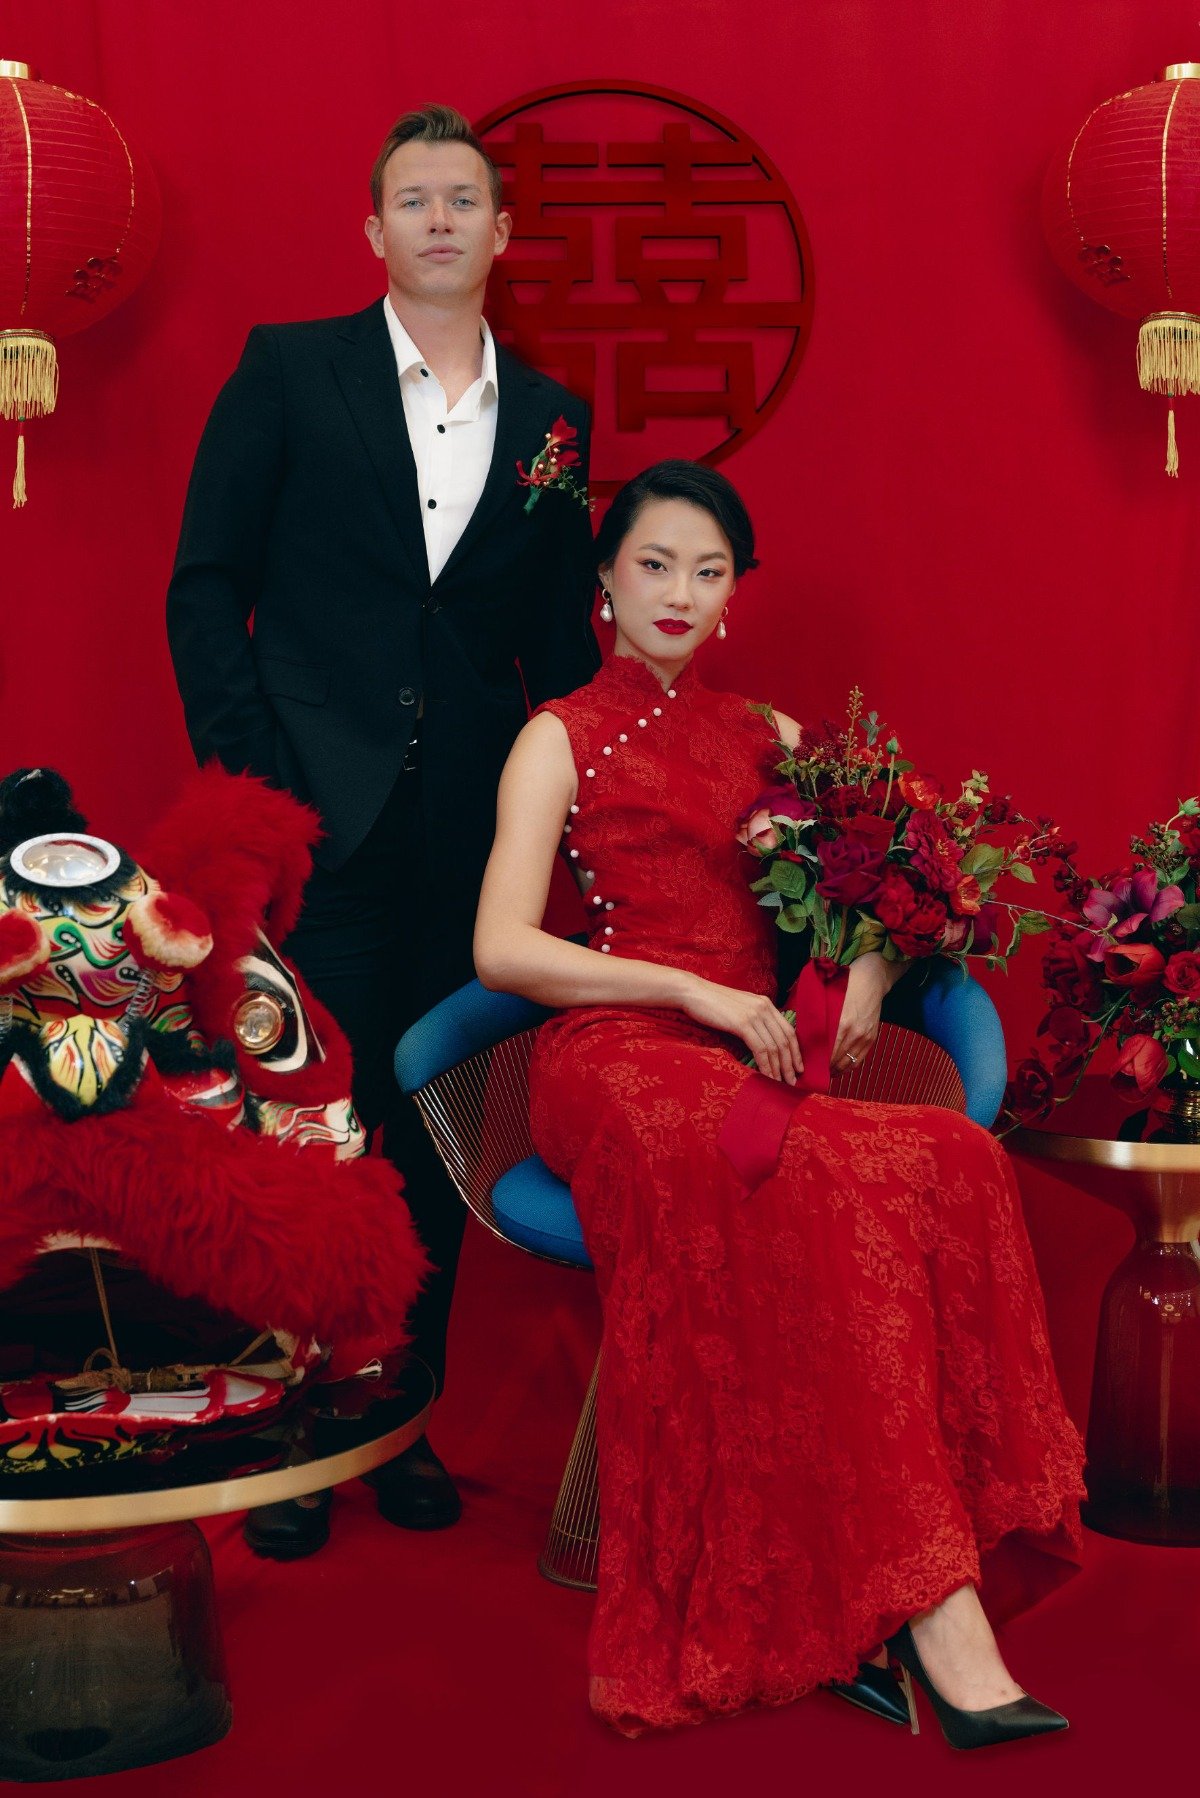 Formal East Asian wedding portraits